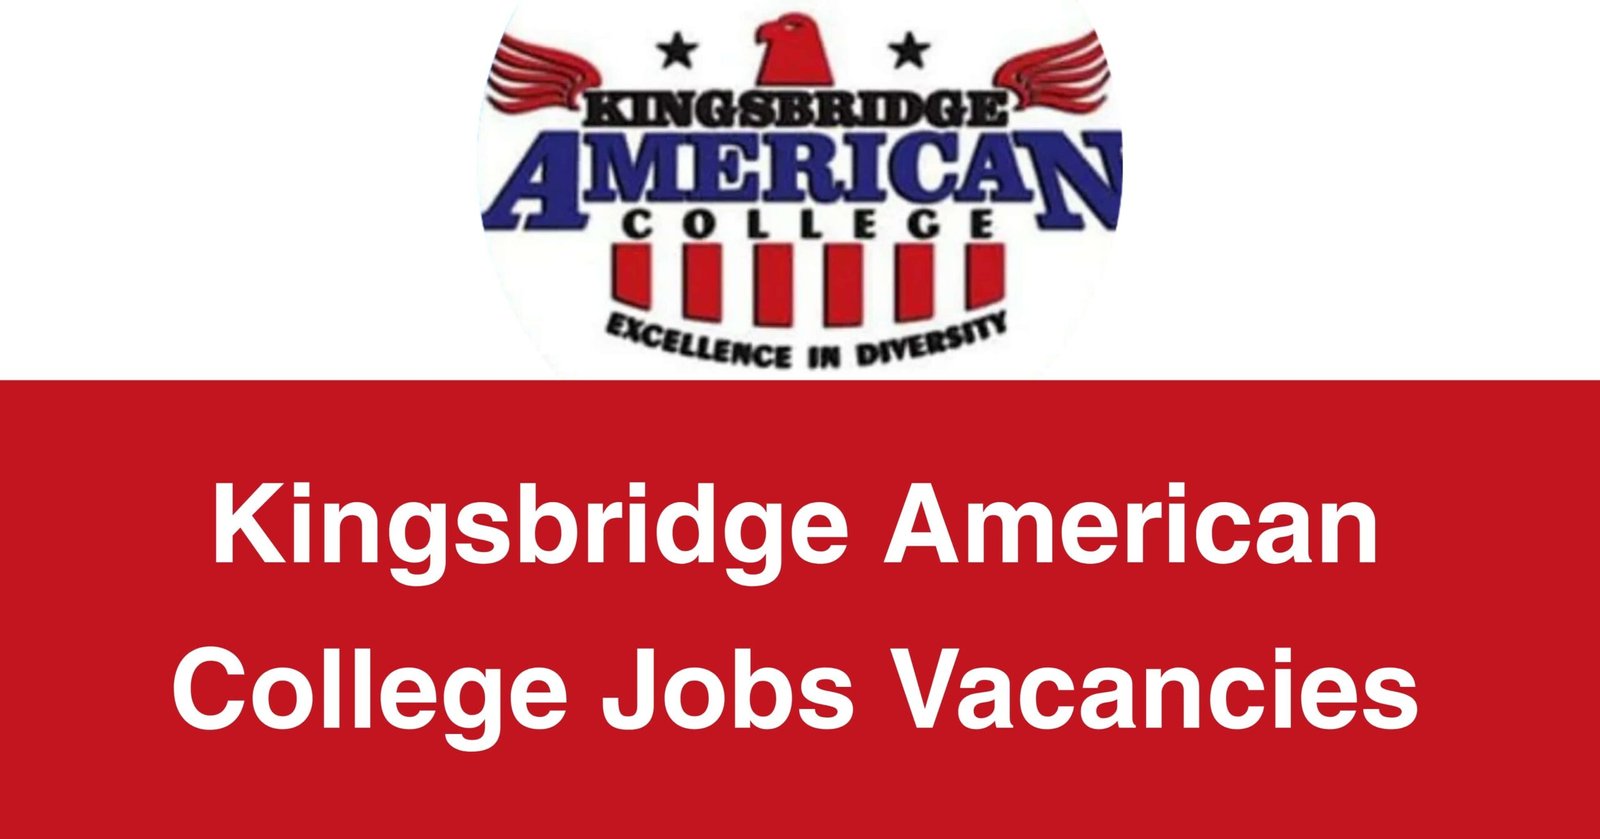 Kingsbridge American College Jobs Vacancies